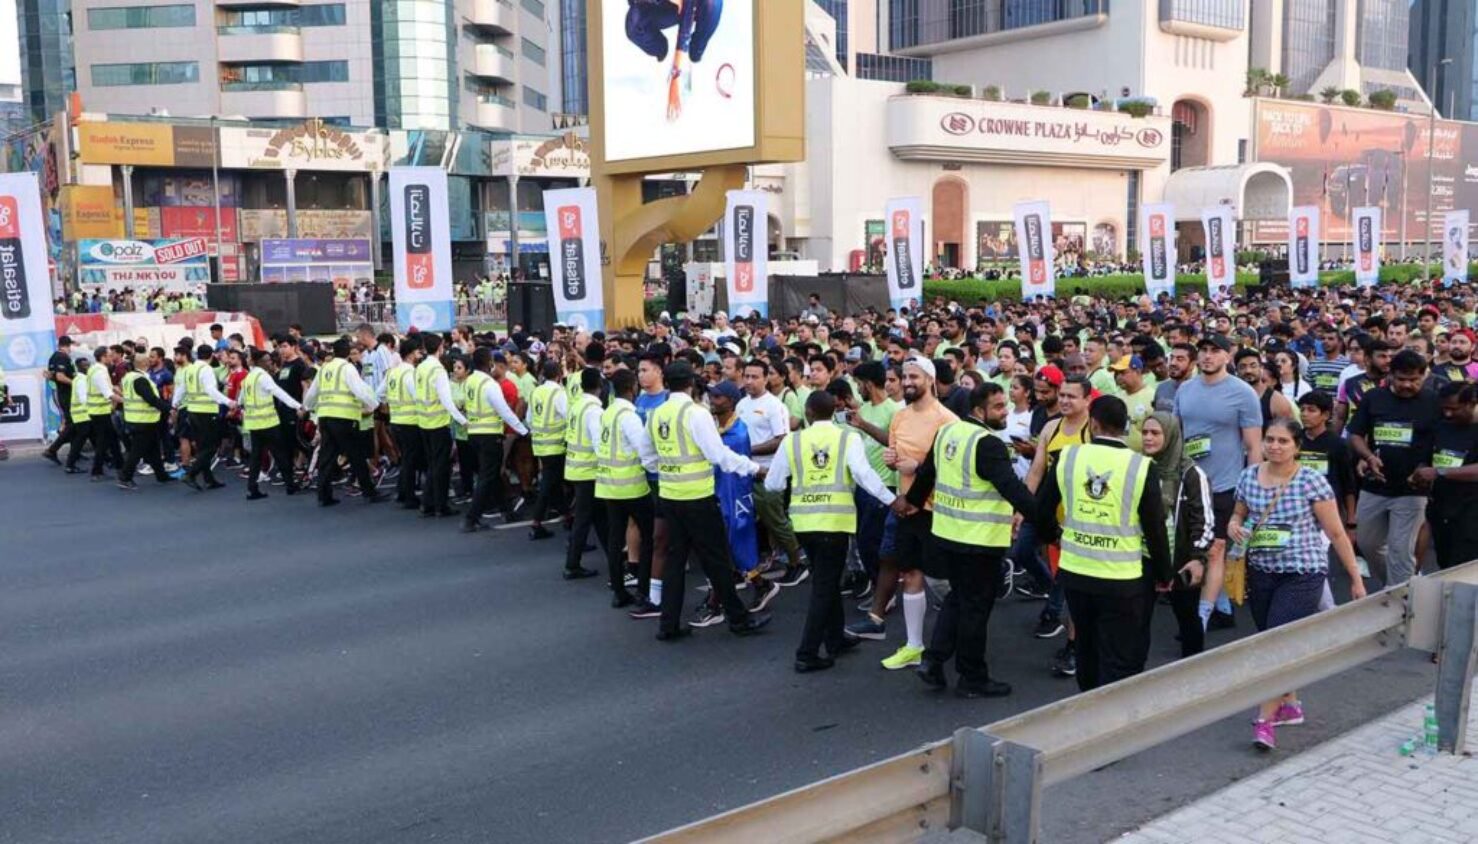 crowd management service at Dubai run event